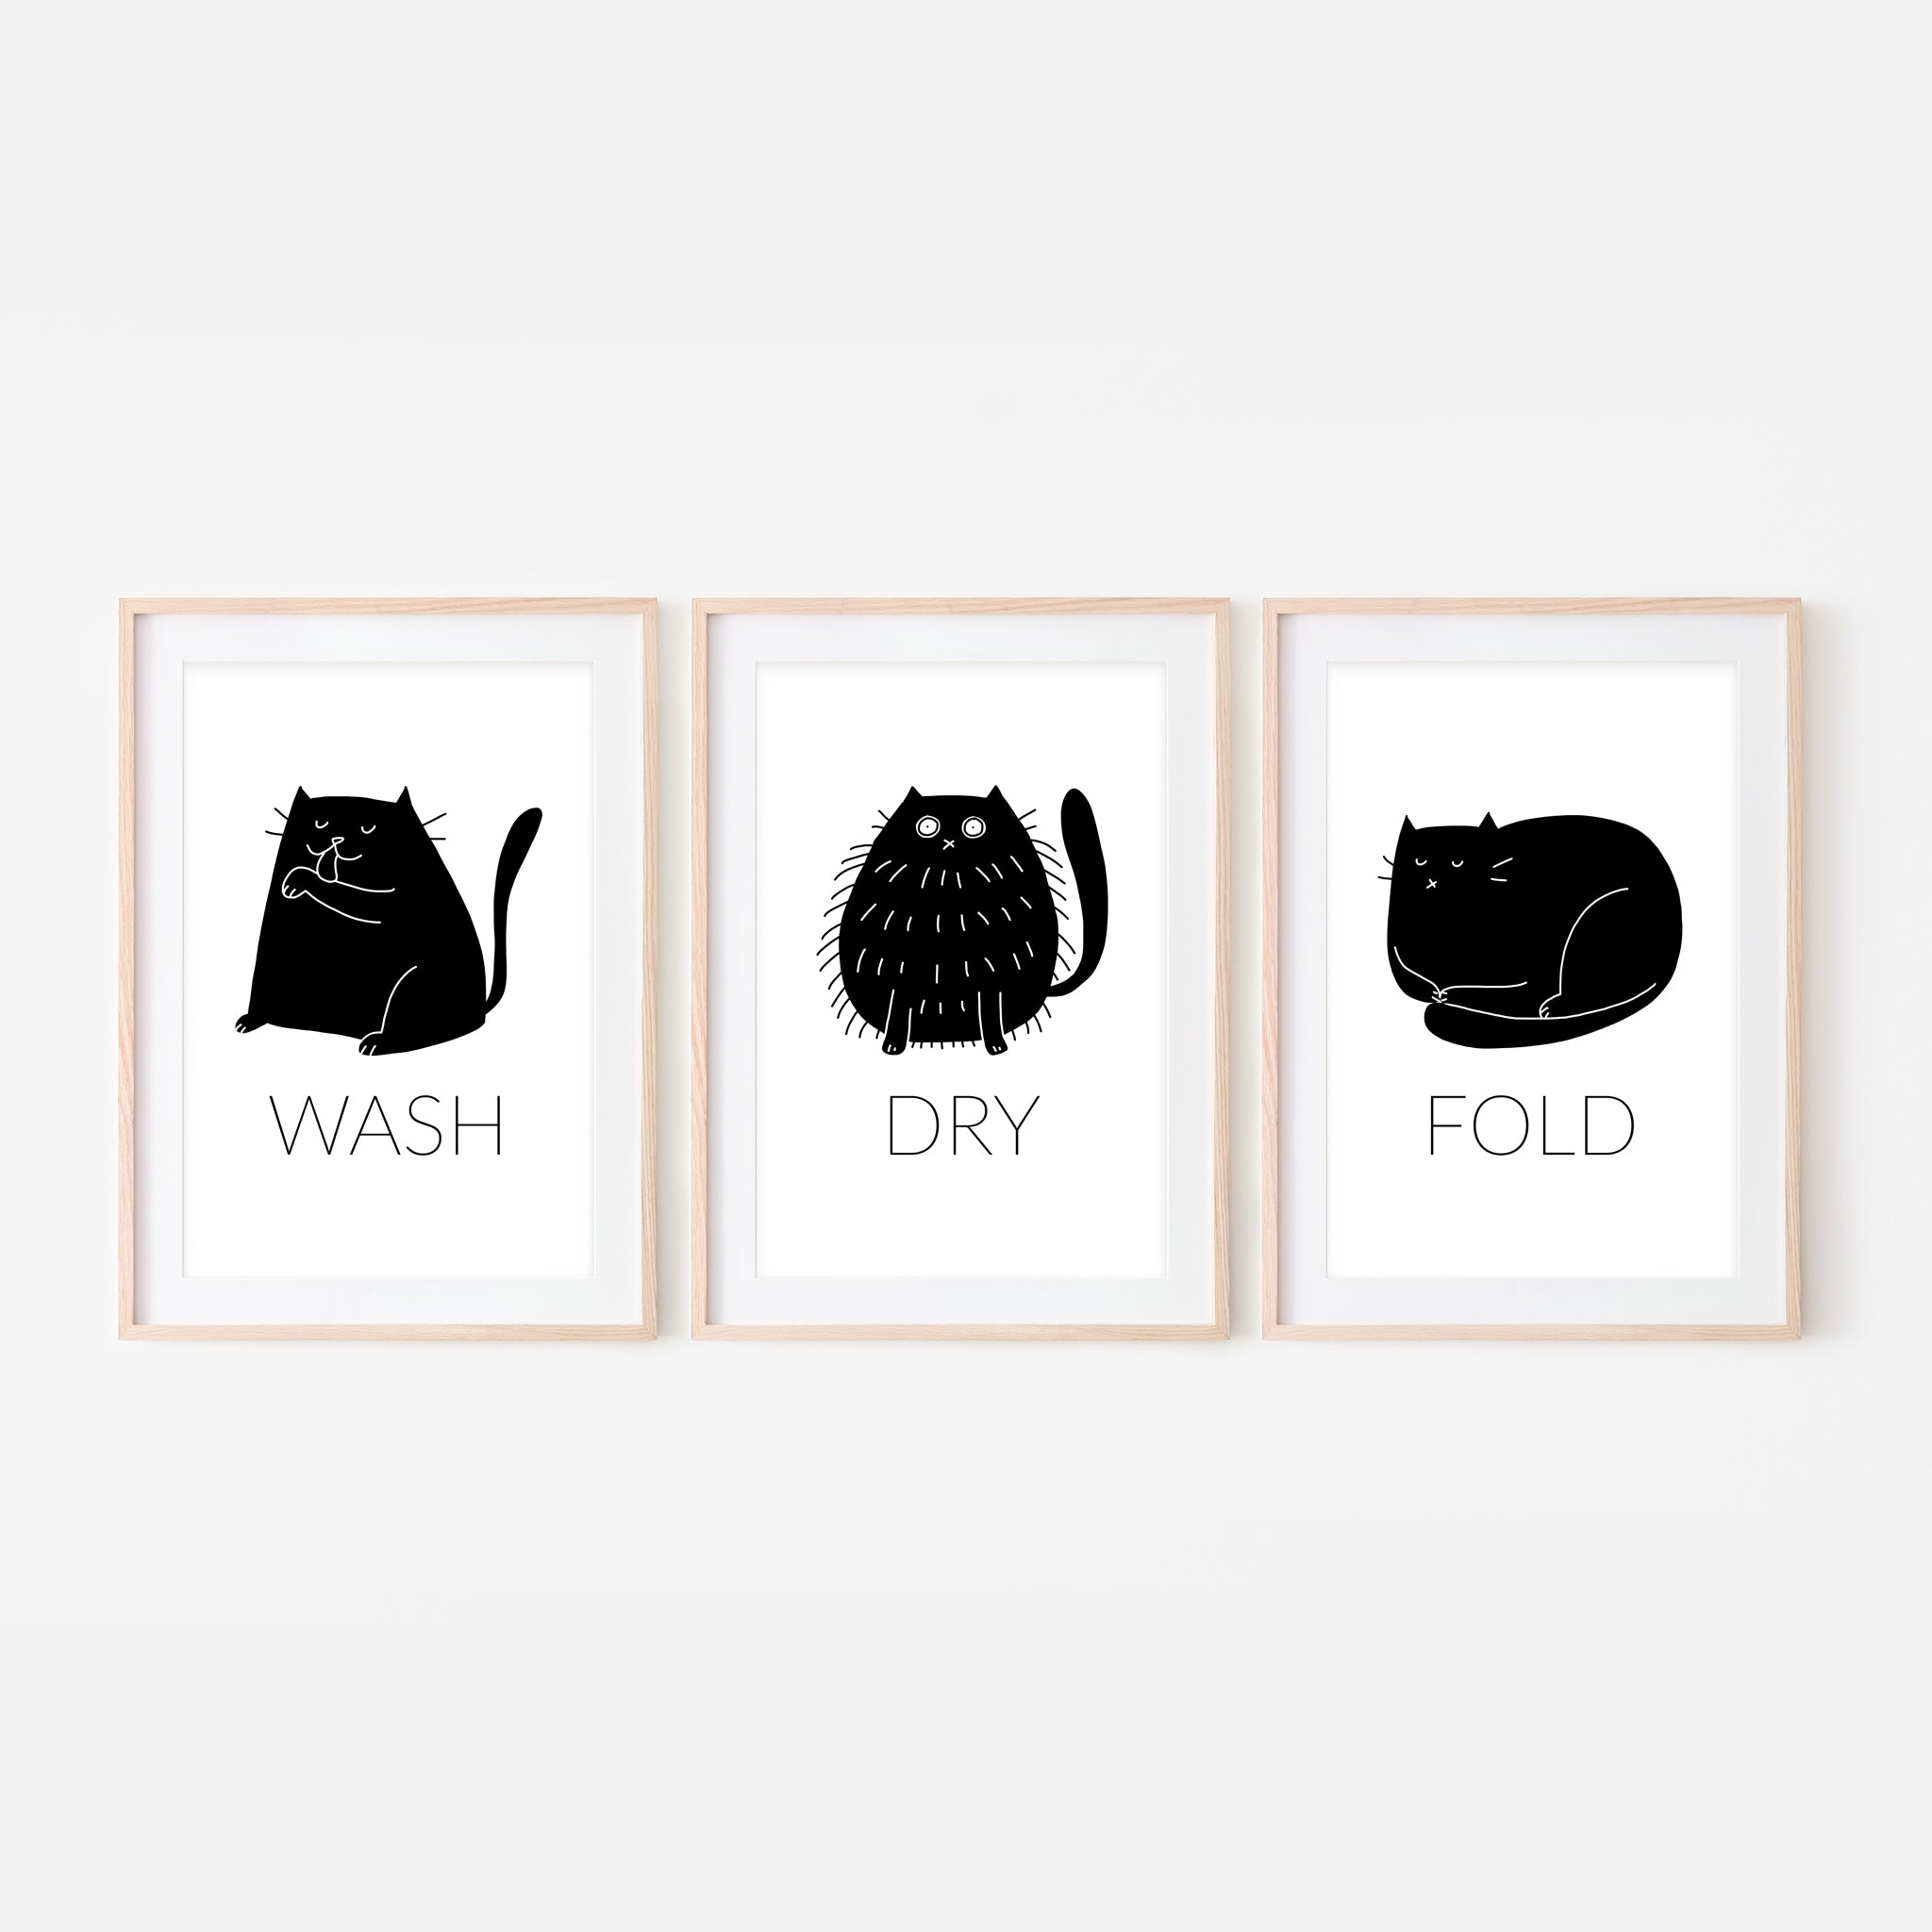 16+ Best Black cat wall art images info